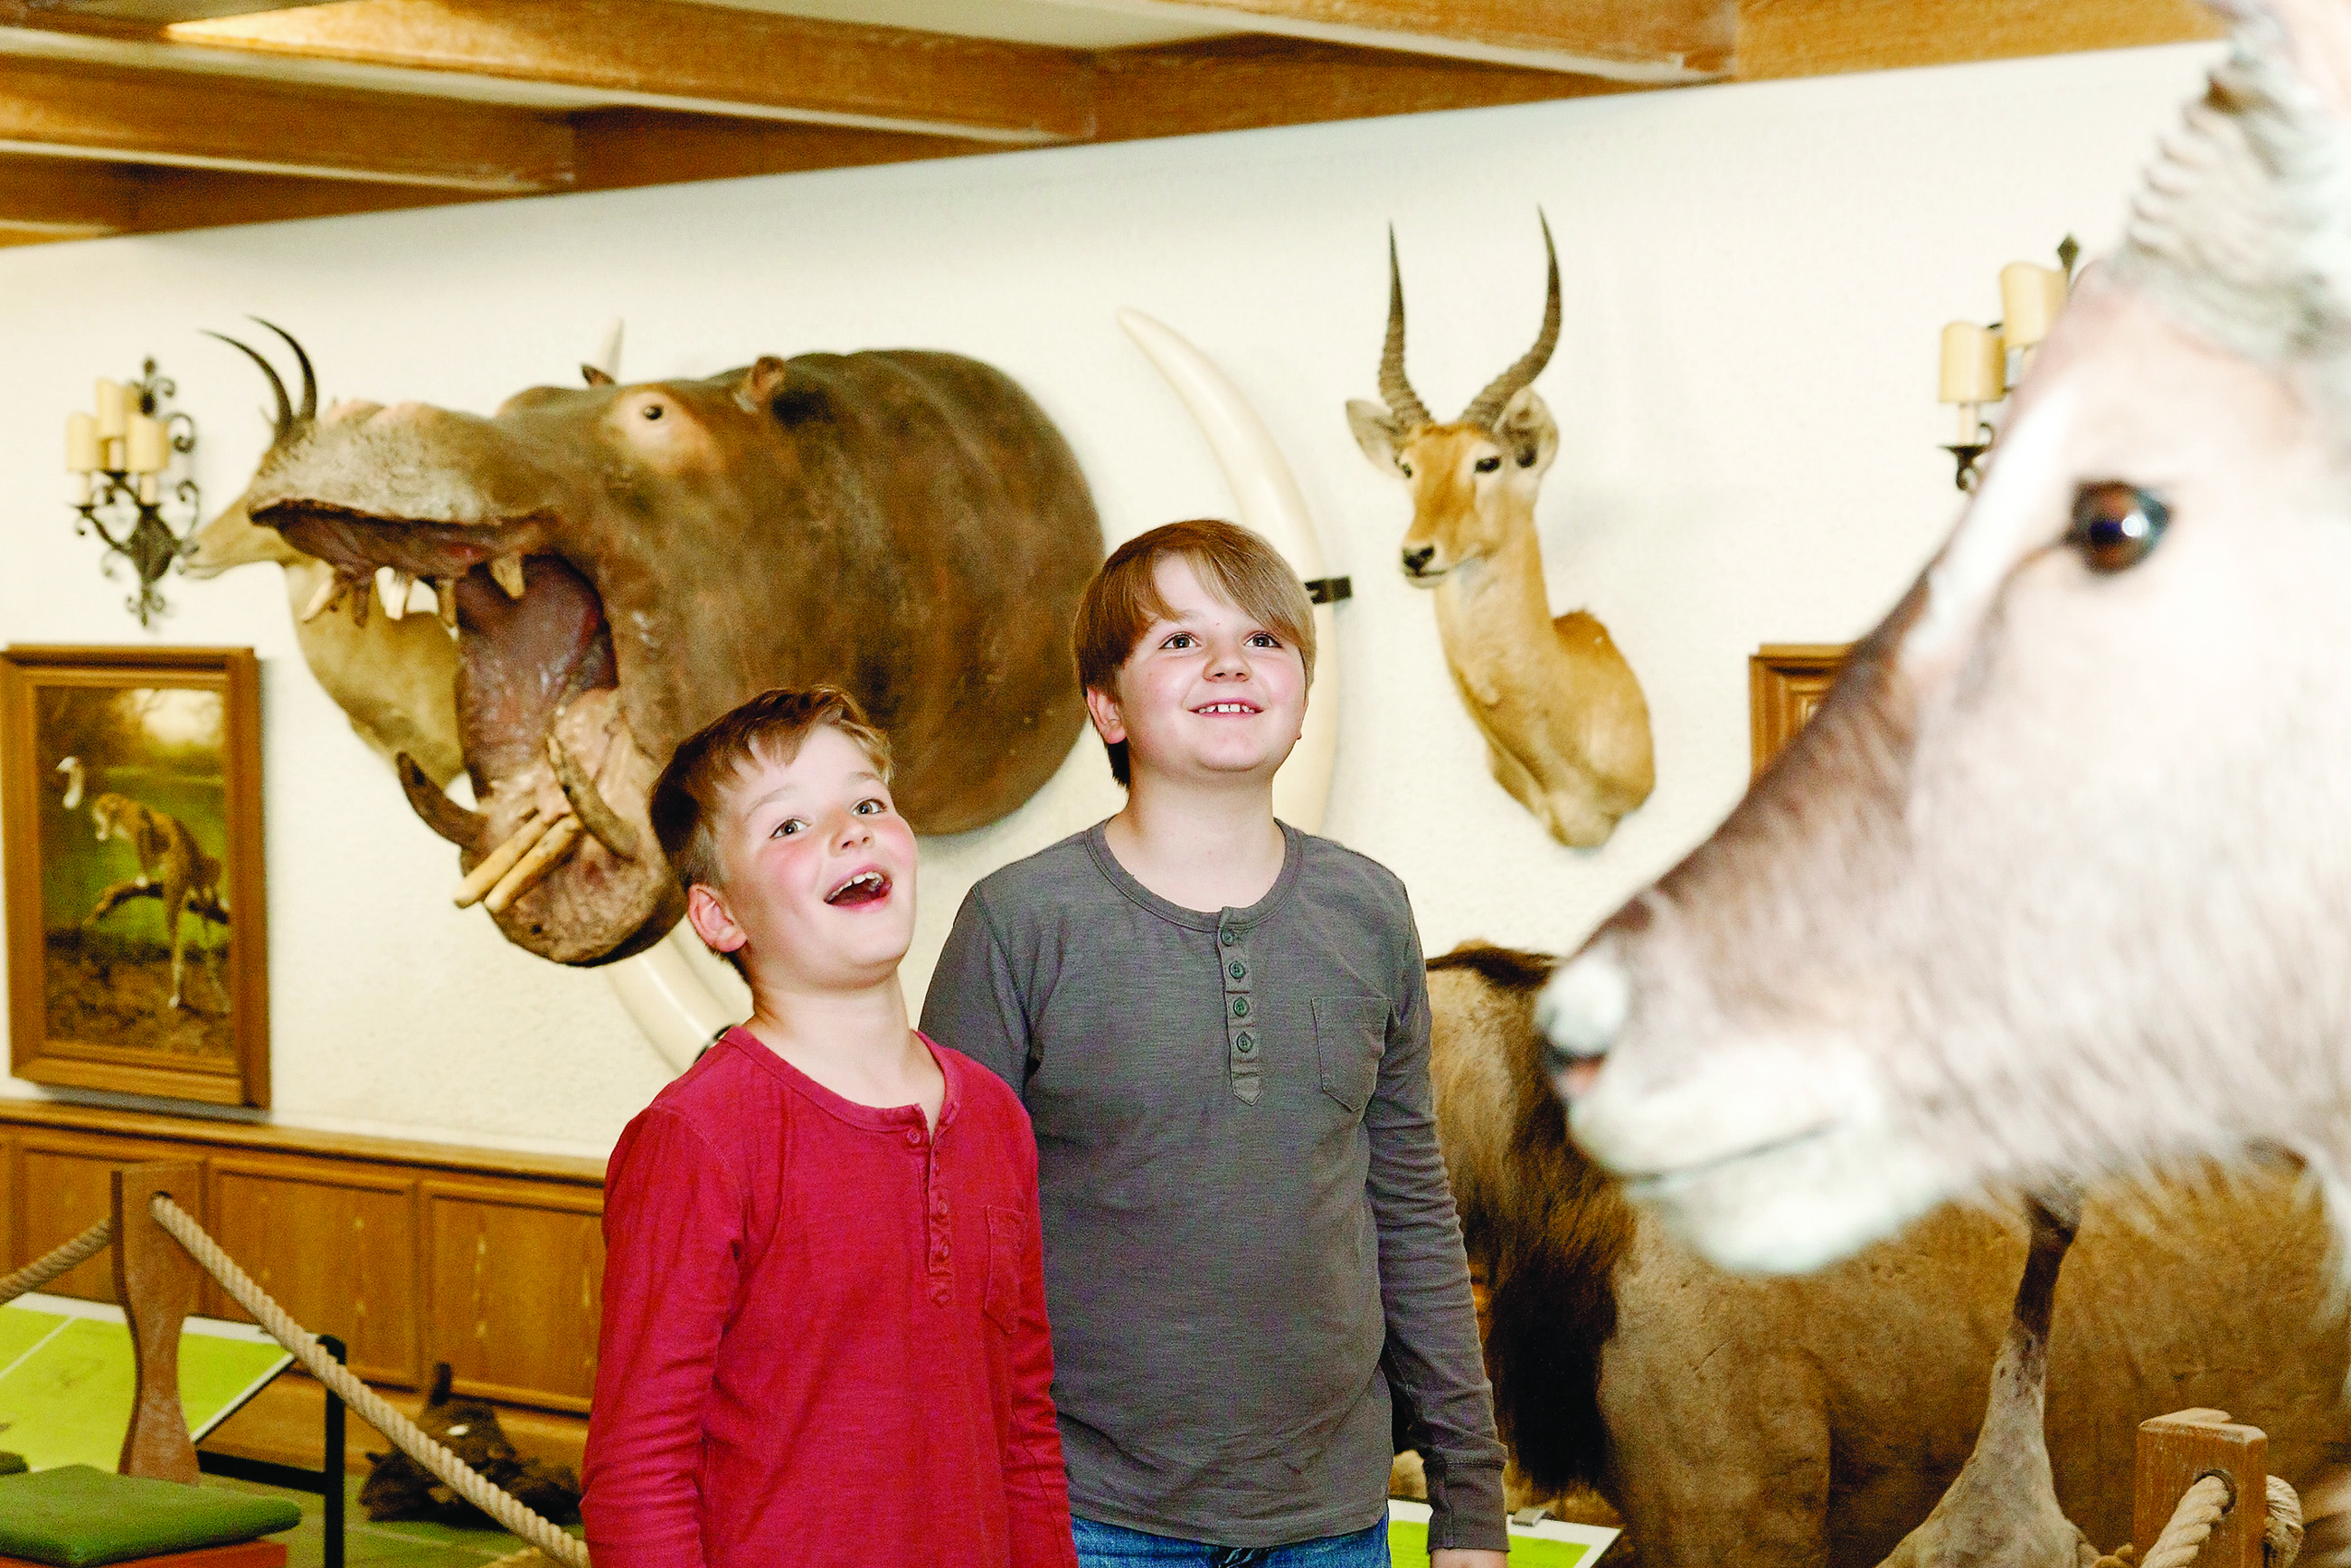 Afrikahalle im Jagdmuseum Wulff in Oerrel in der Südheide Gifhorn